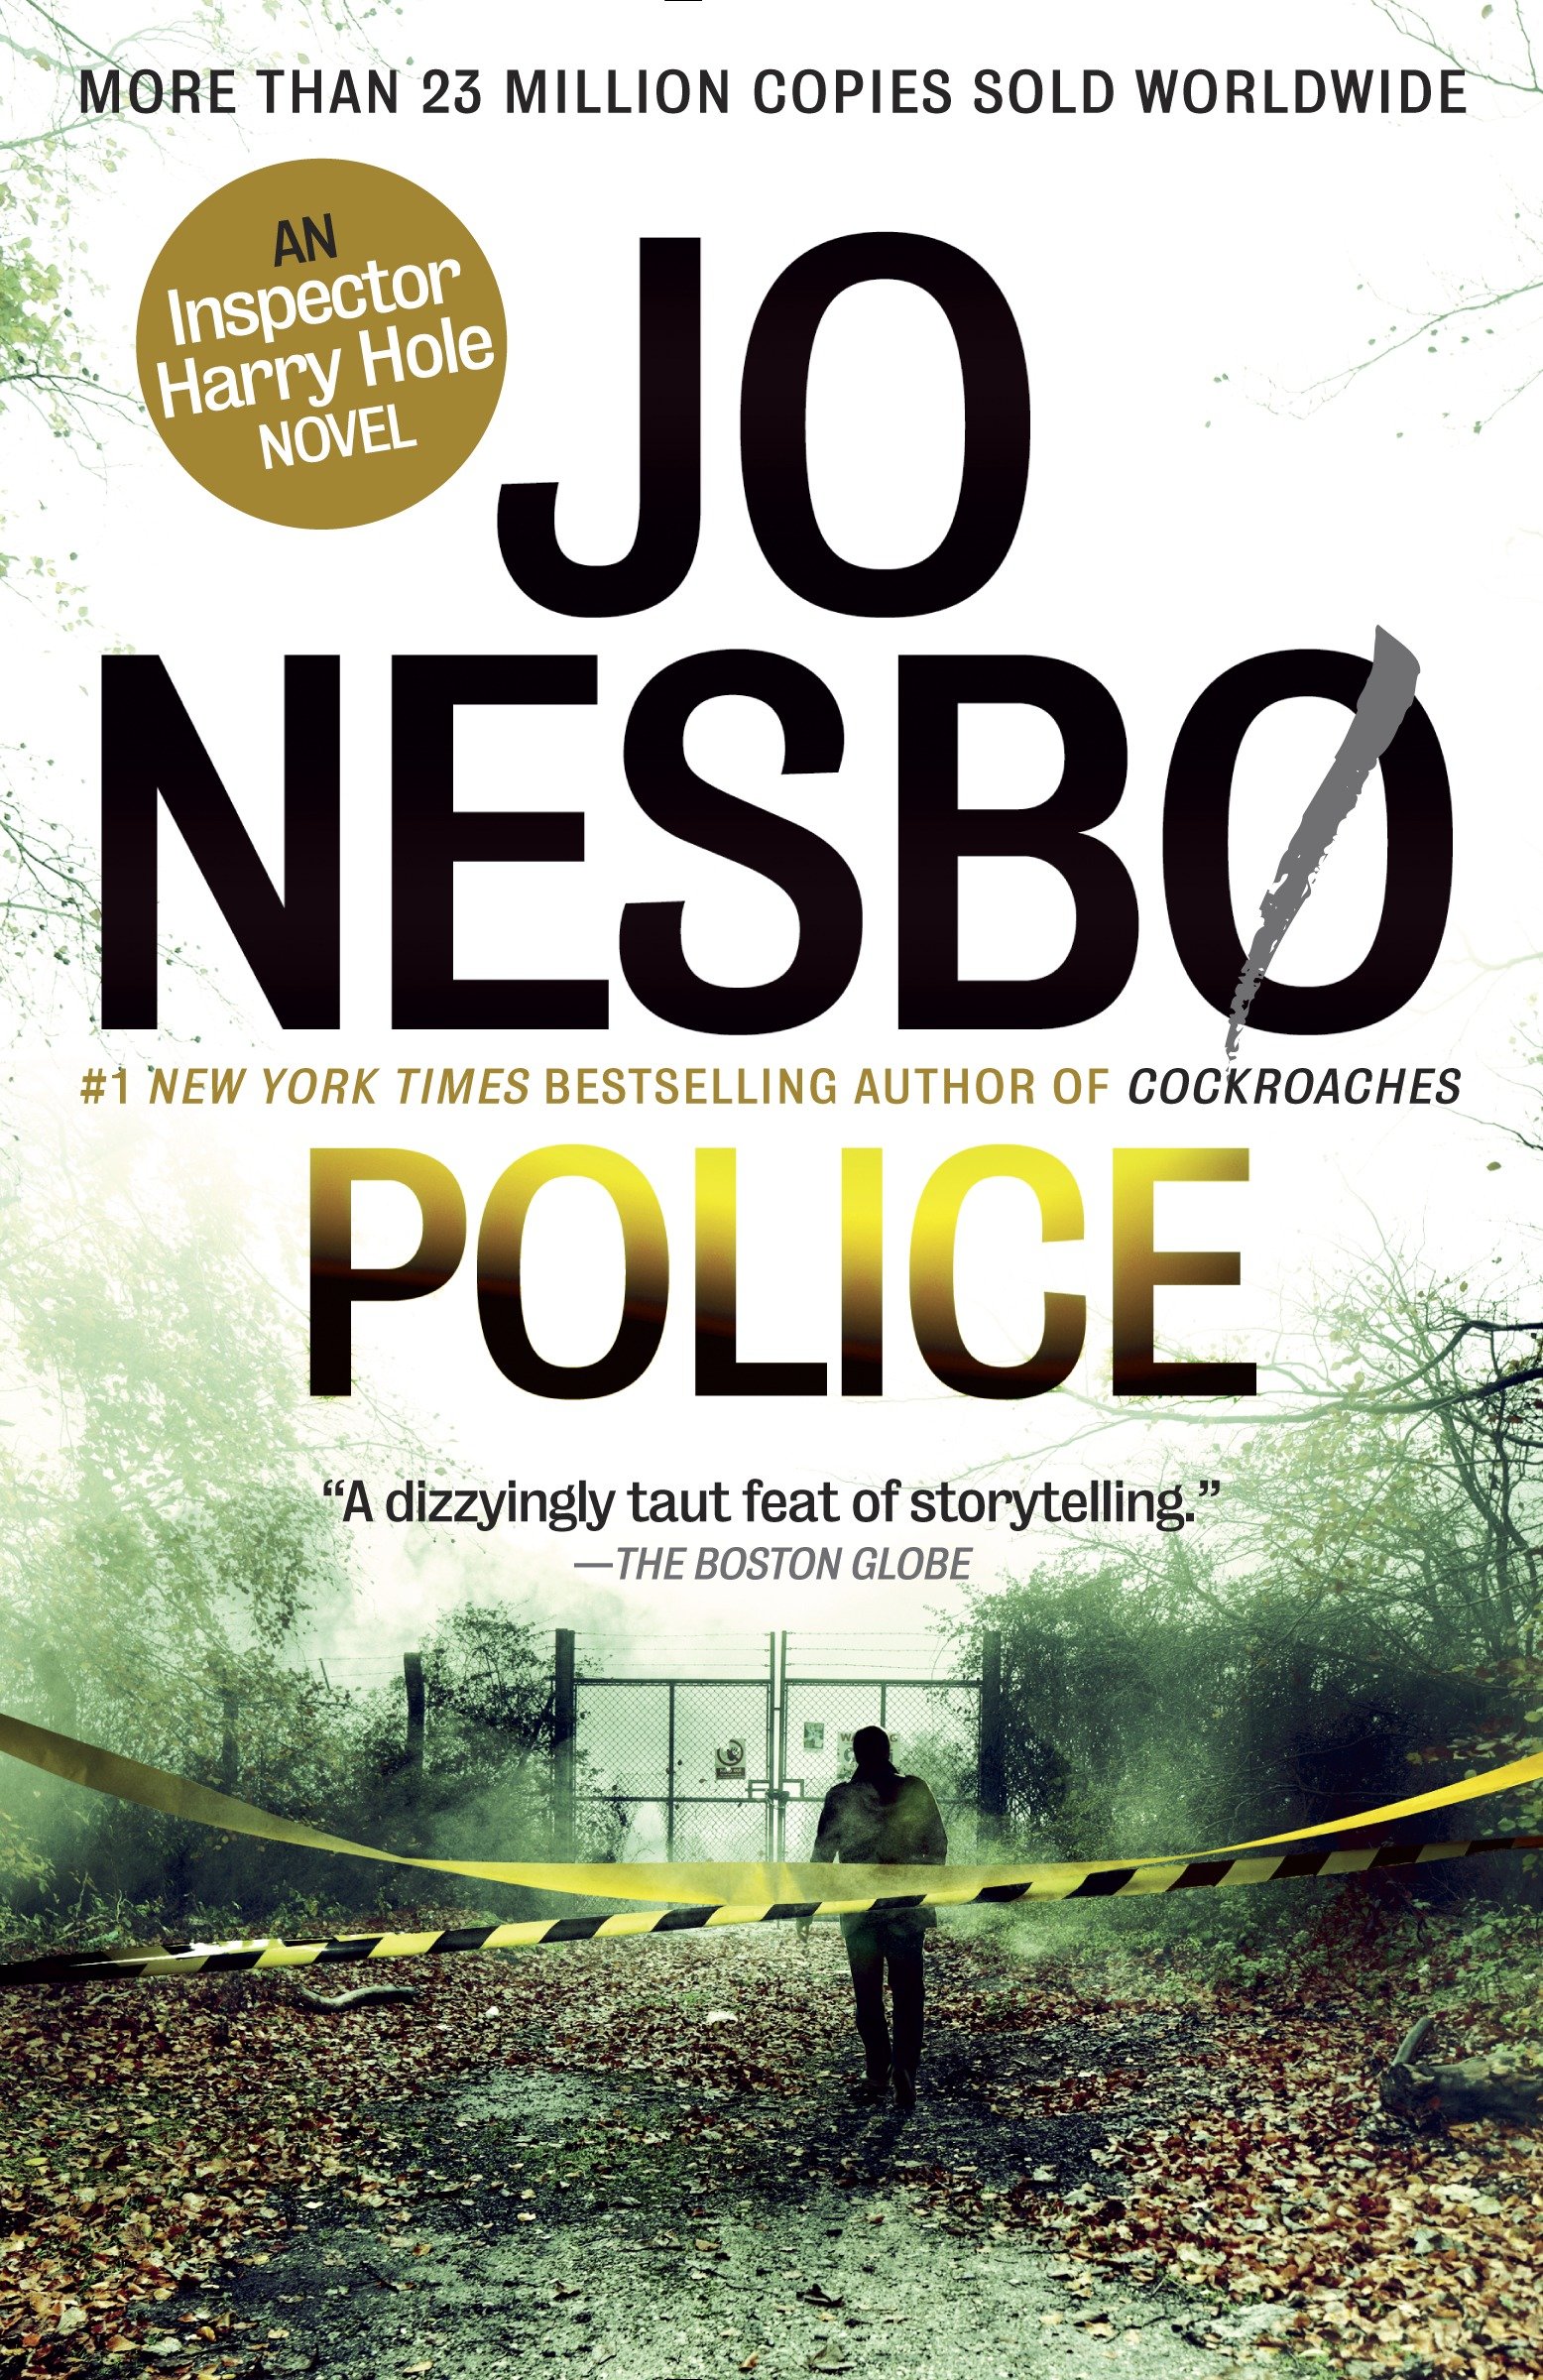 Police a Harry Hole novel cover image